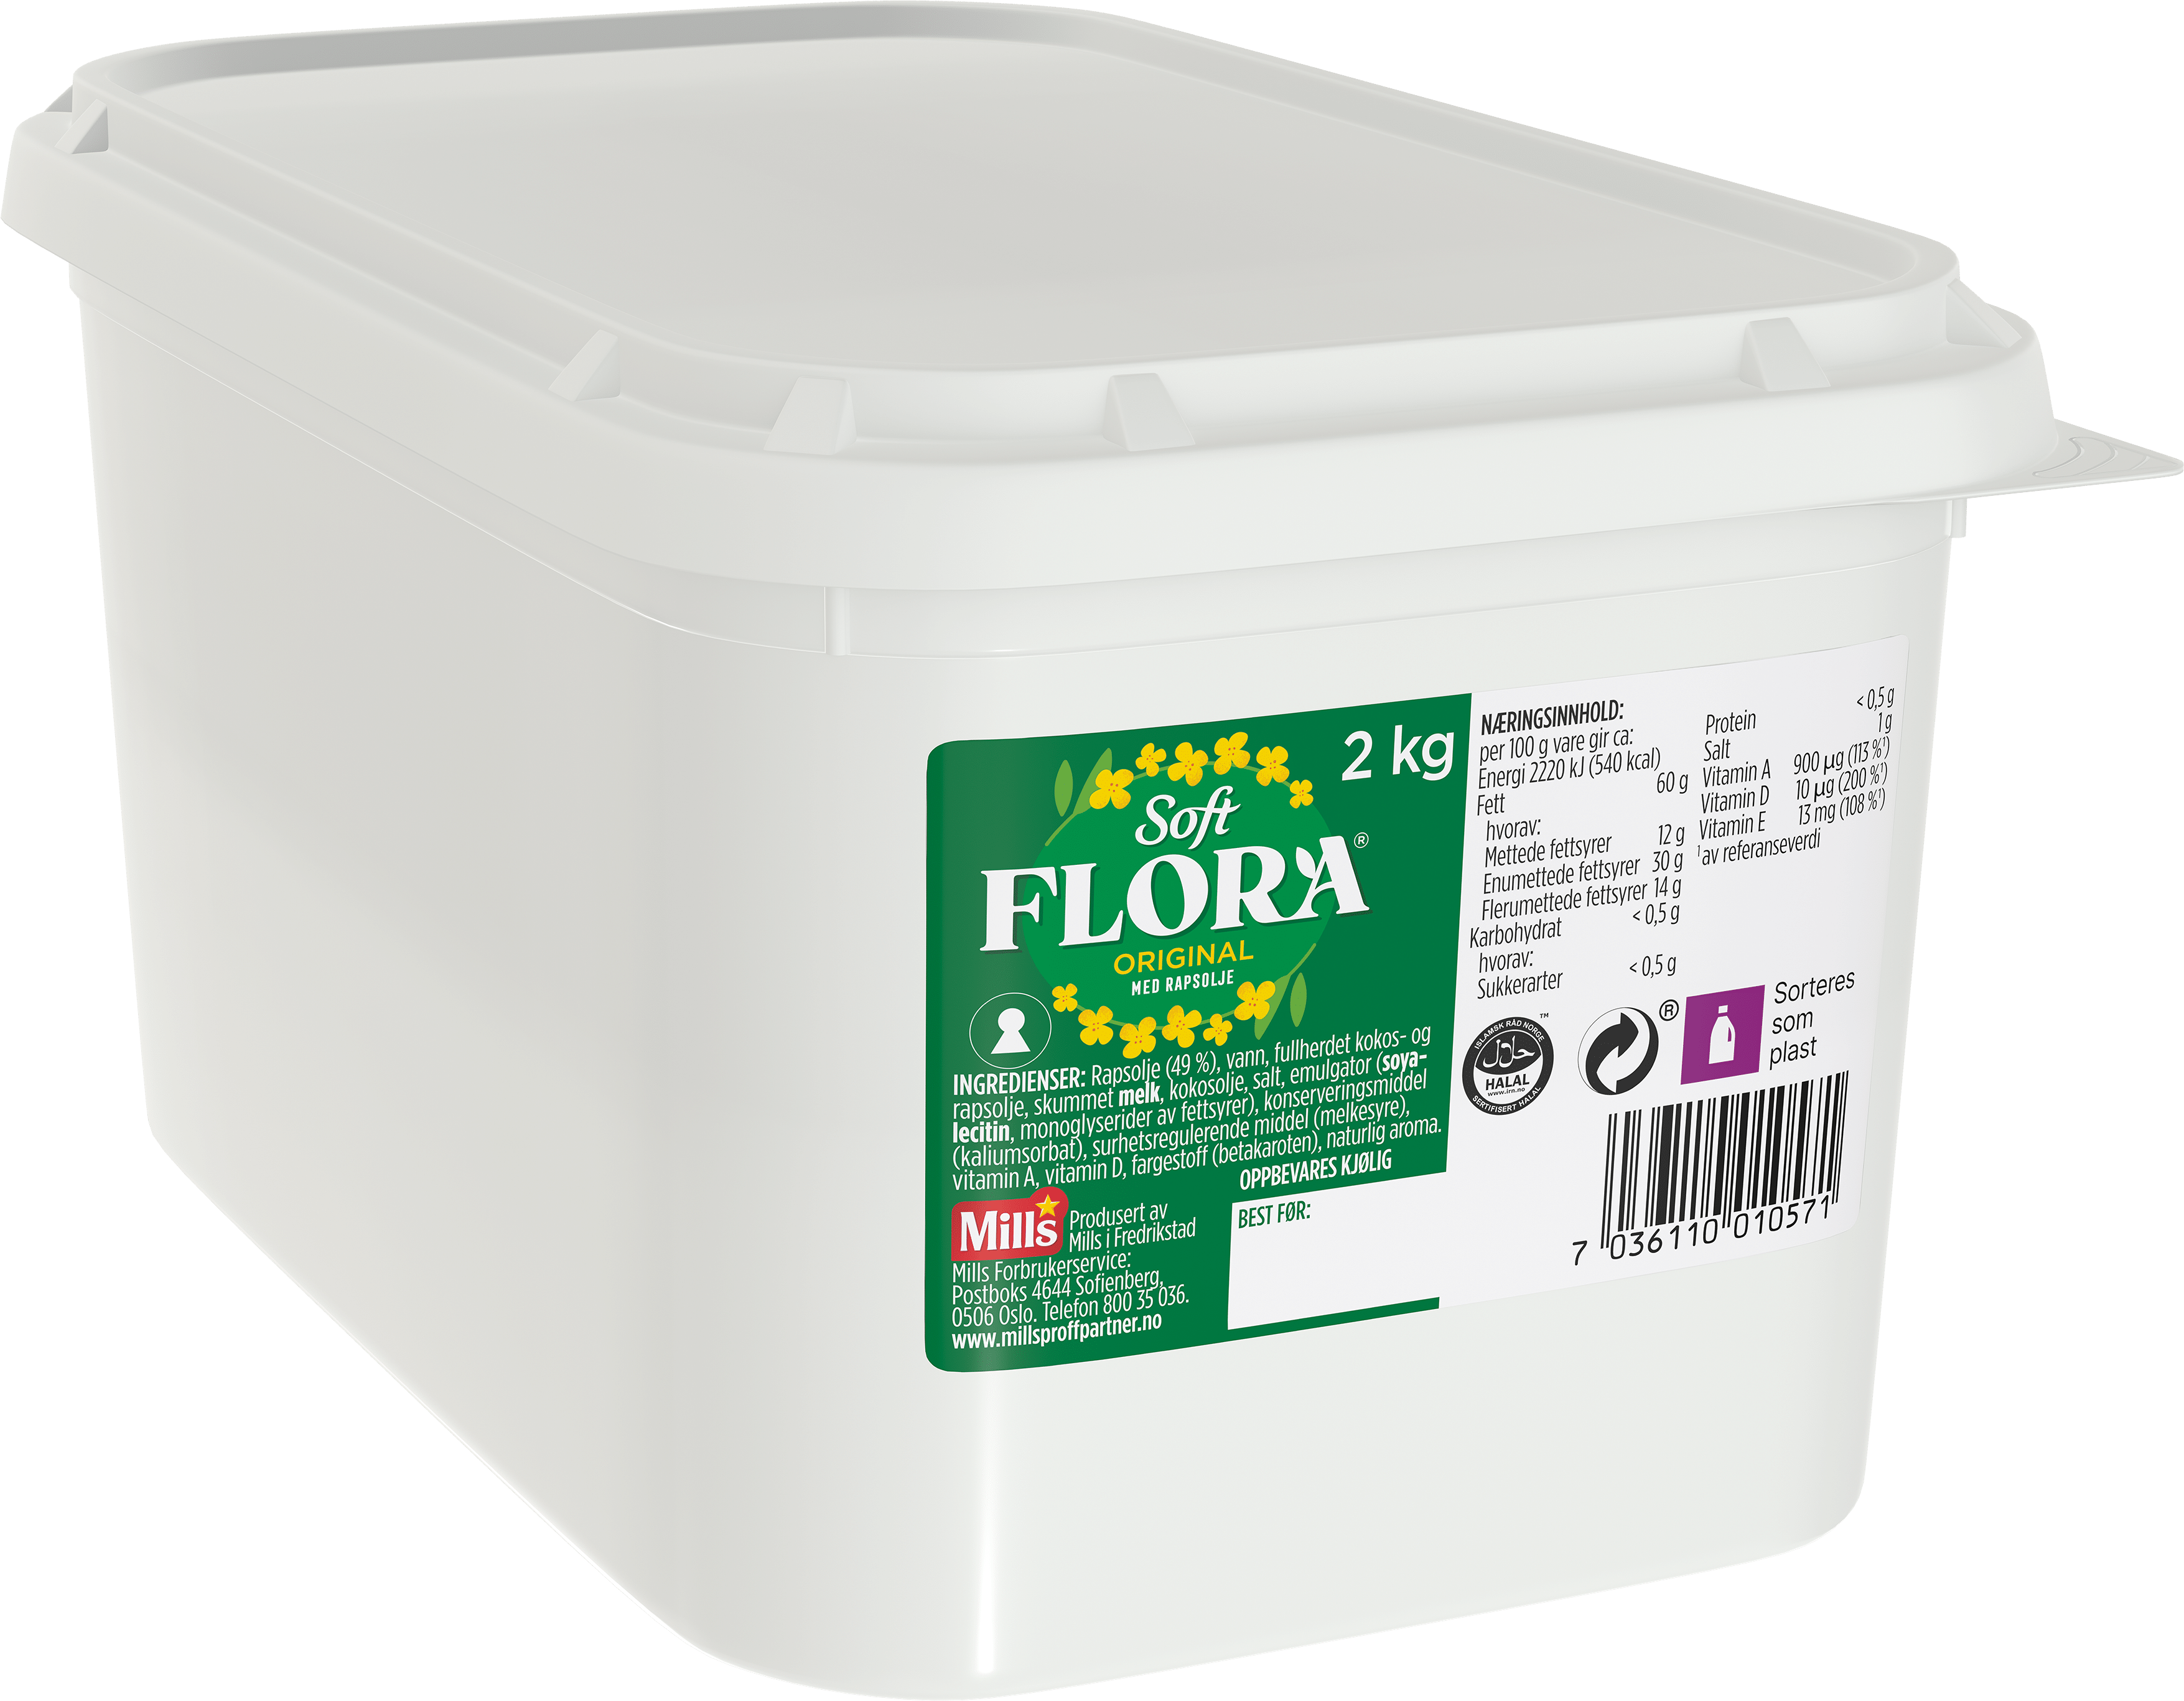 Soft Flora Original 2 kg boks pakningsfoto